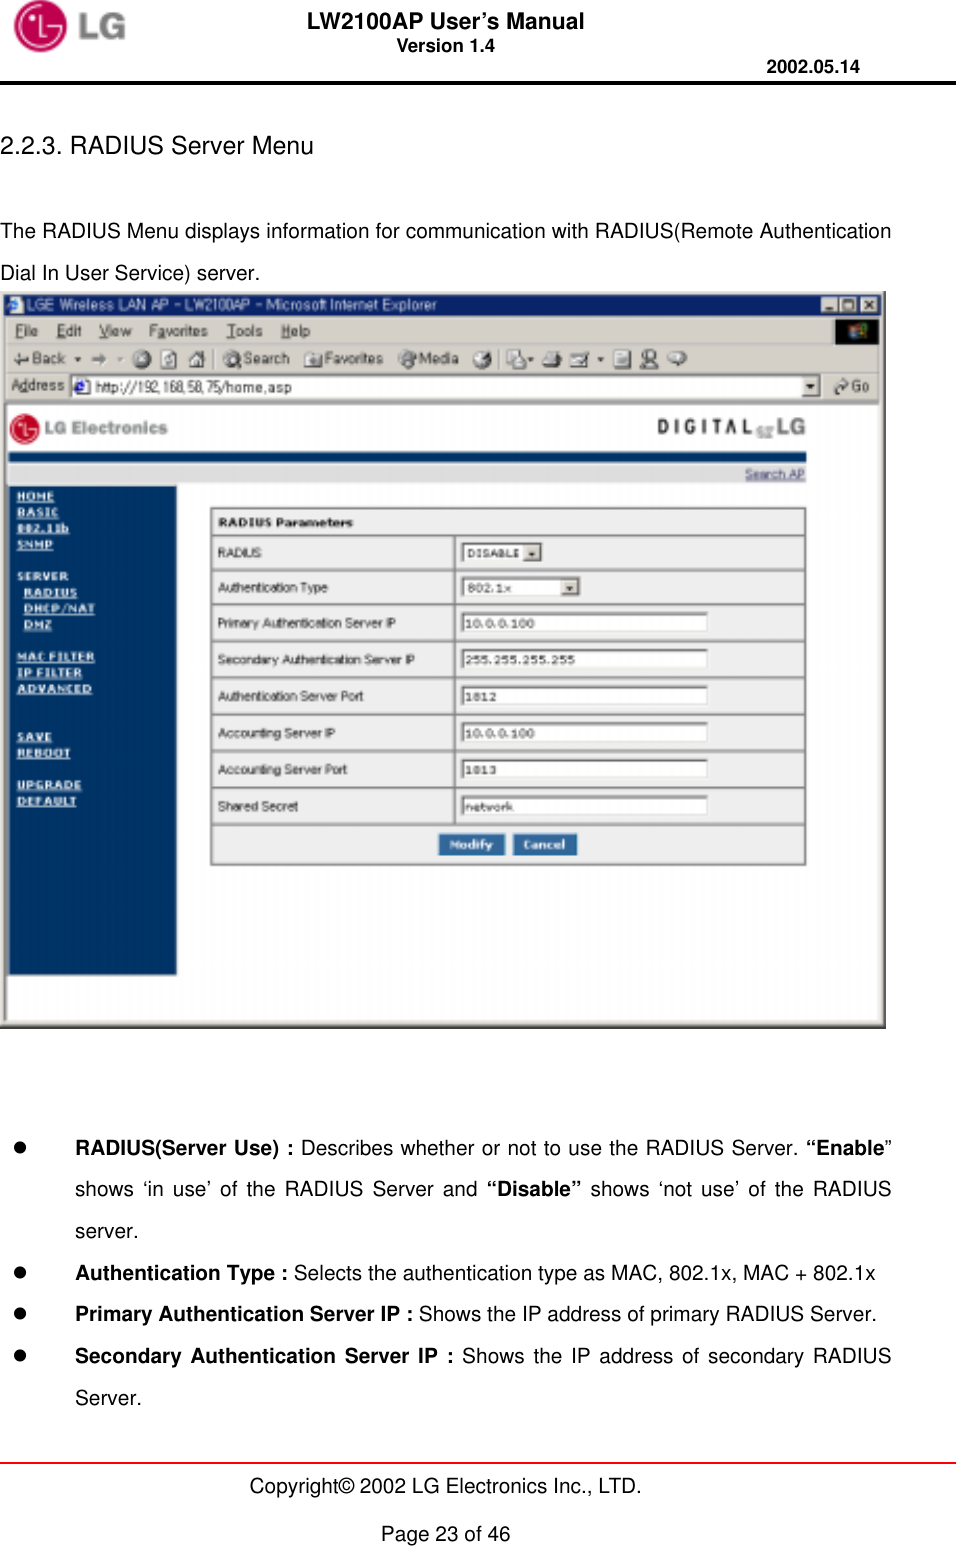 LW2100AP User’s Manual Version 1.4 2002.05.14   Copyright© 2002 LG Electronics Inc., LTD.  Page 23 of 46  2.2.3. RADIUS Server Menu  The RADIUS Menu displays information for communication with RADIUS(Remote Authentication Dial In User Service) server.       RADIUS(Server Use) : Describes whether or not to use the RADIUS Server. “Enable” shows ‘in use’ of the RADIUS Server and “Disable” shows ‘not use’ of the RADIUS server.   Authentication Type : Selects the authentication type as MAC, 802.1x, MAC + 802.1x     Primary Authentication Server IP : Shows the IP address of primary RADIUS Server.   Secondary Authentication Server IP : Shows the IP address of secondary RADIUS Server. 